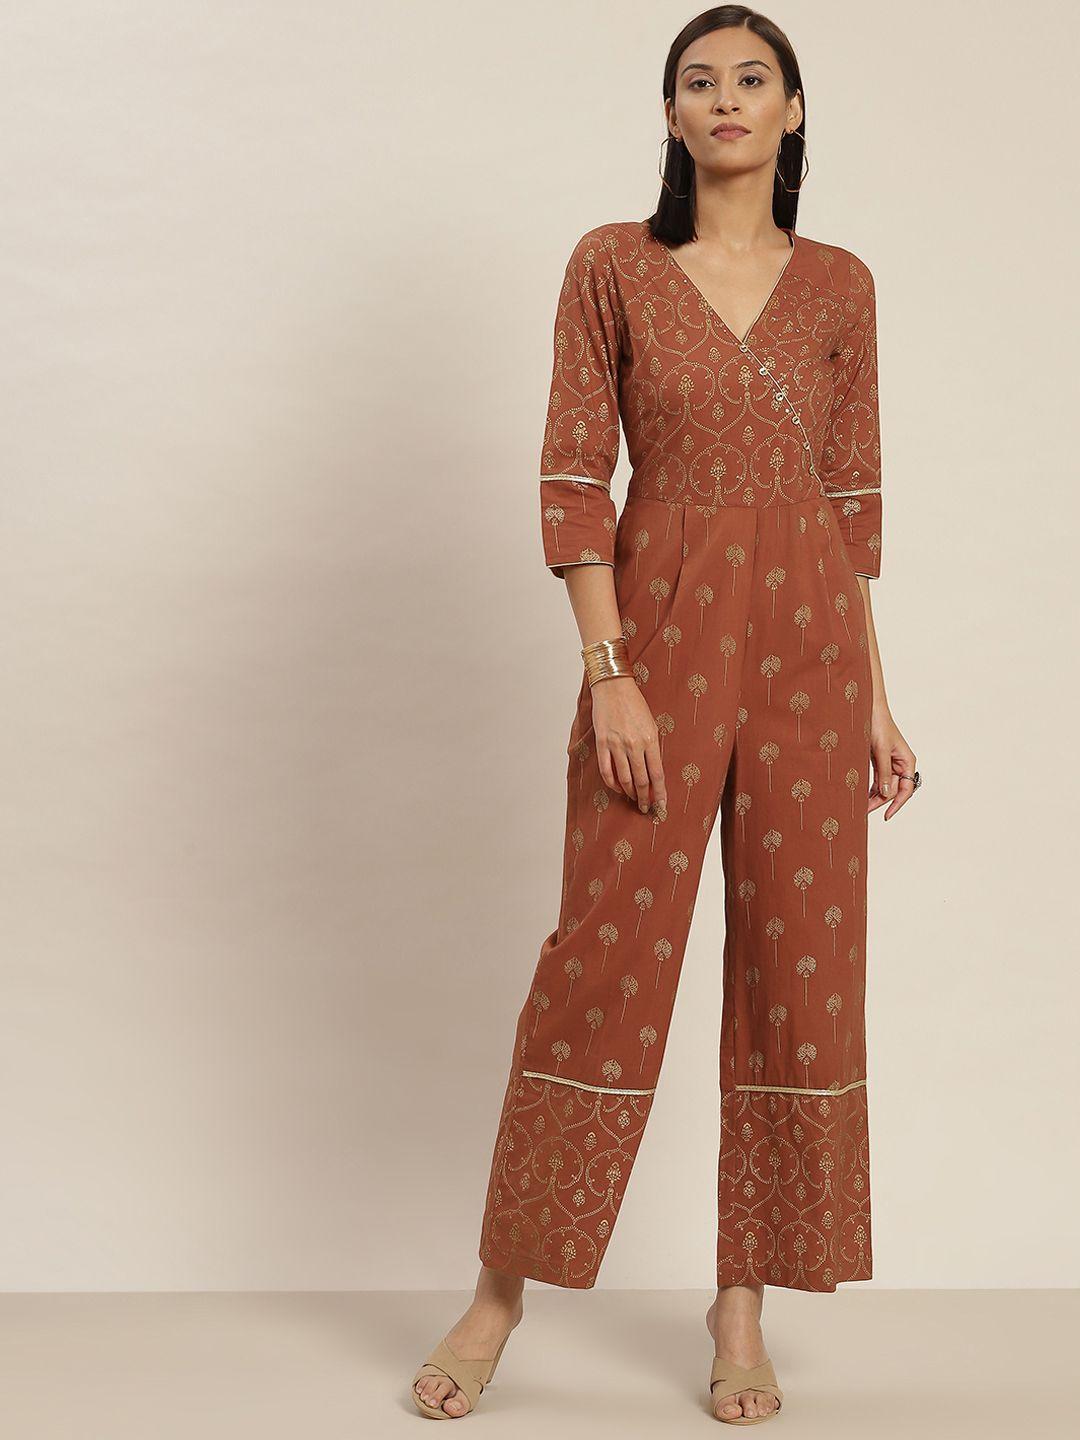 jaipur kurti rust brown & golden ethnic motifs printed angarakha style basic jumpsuit